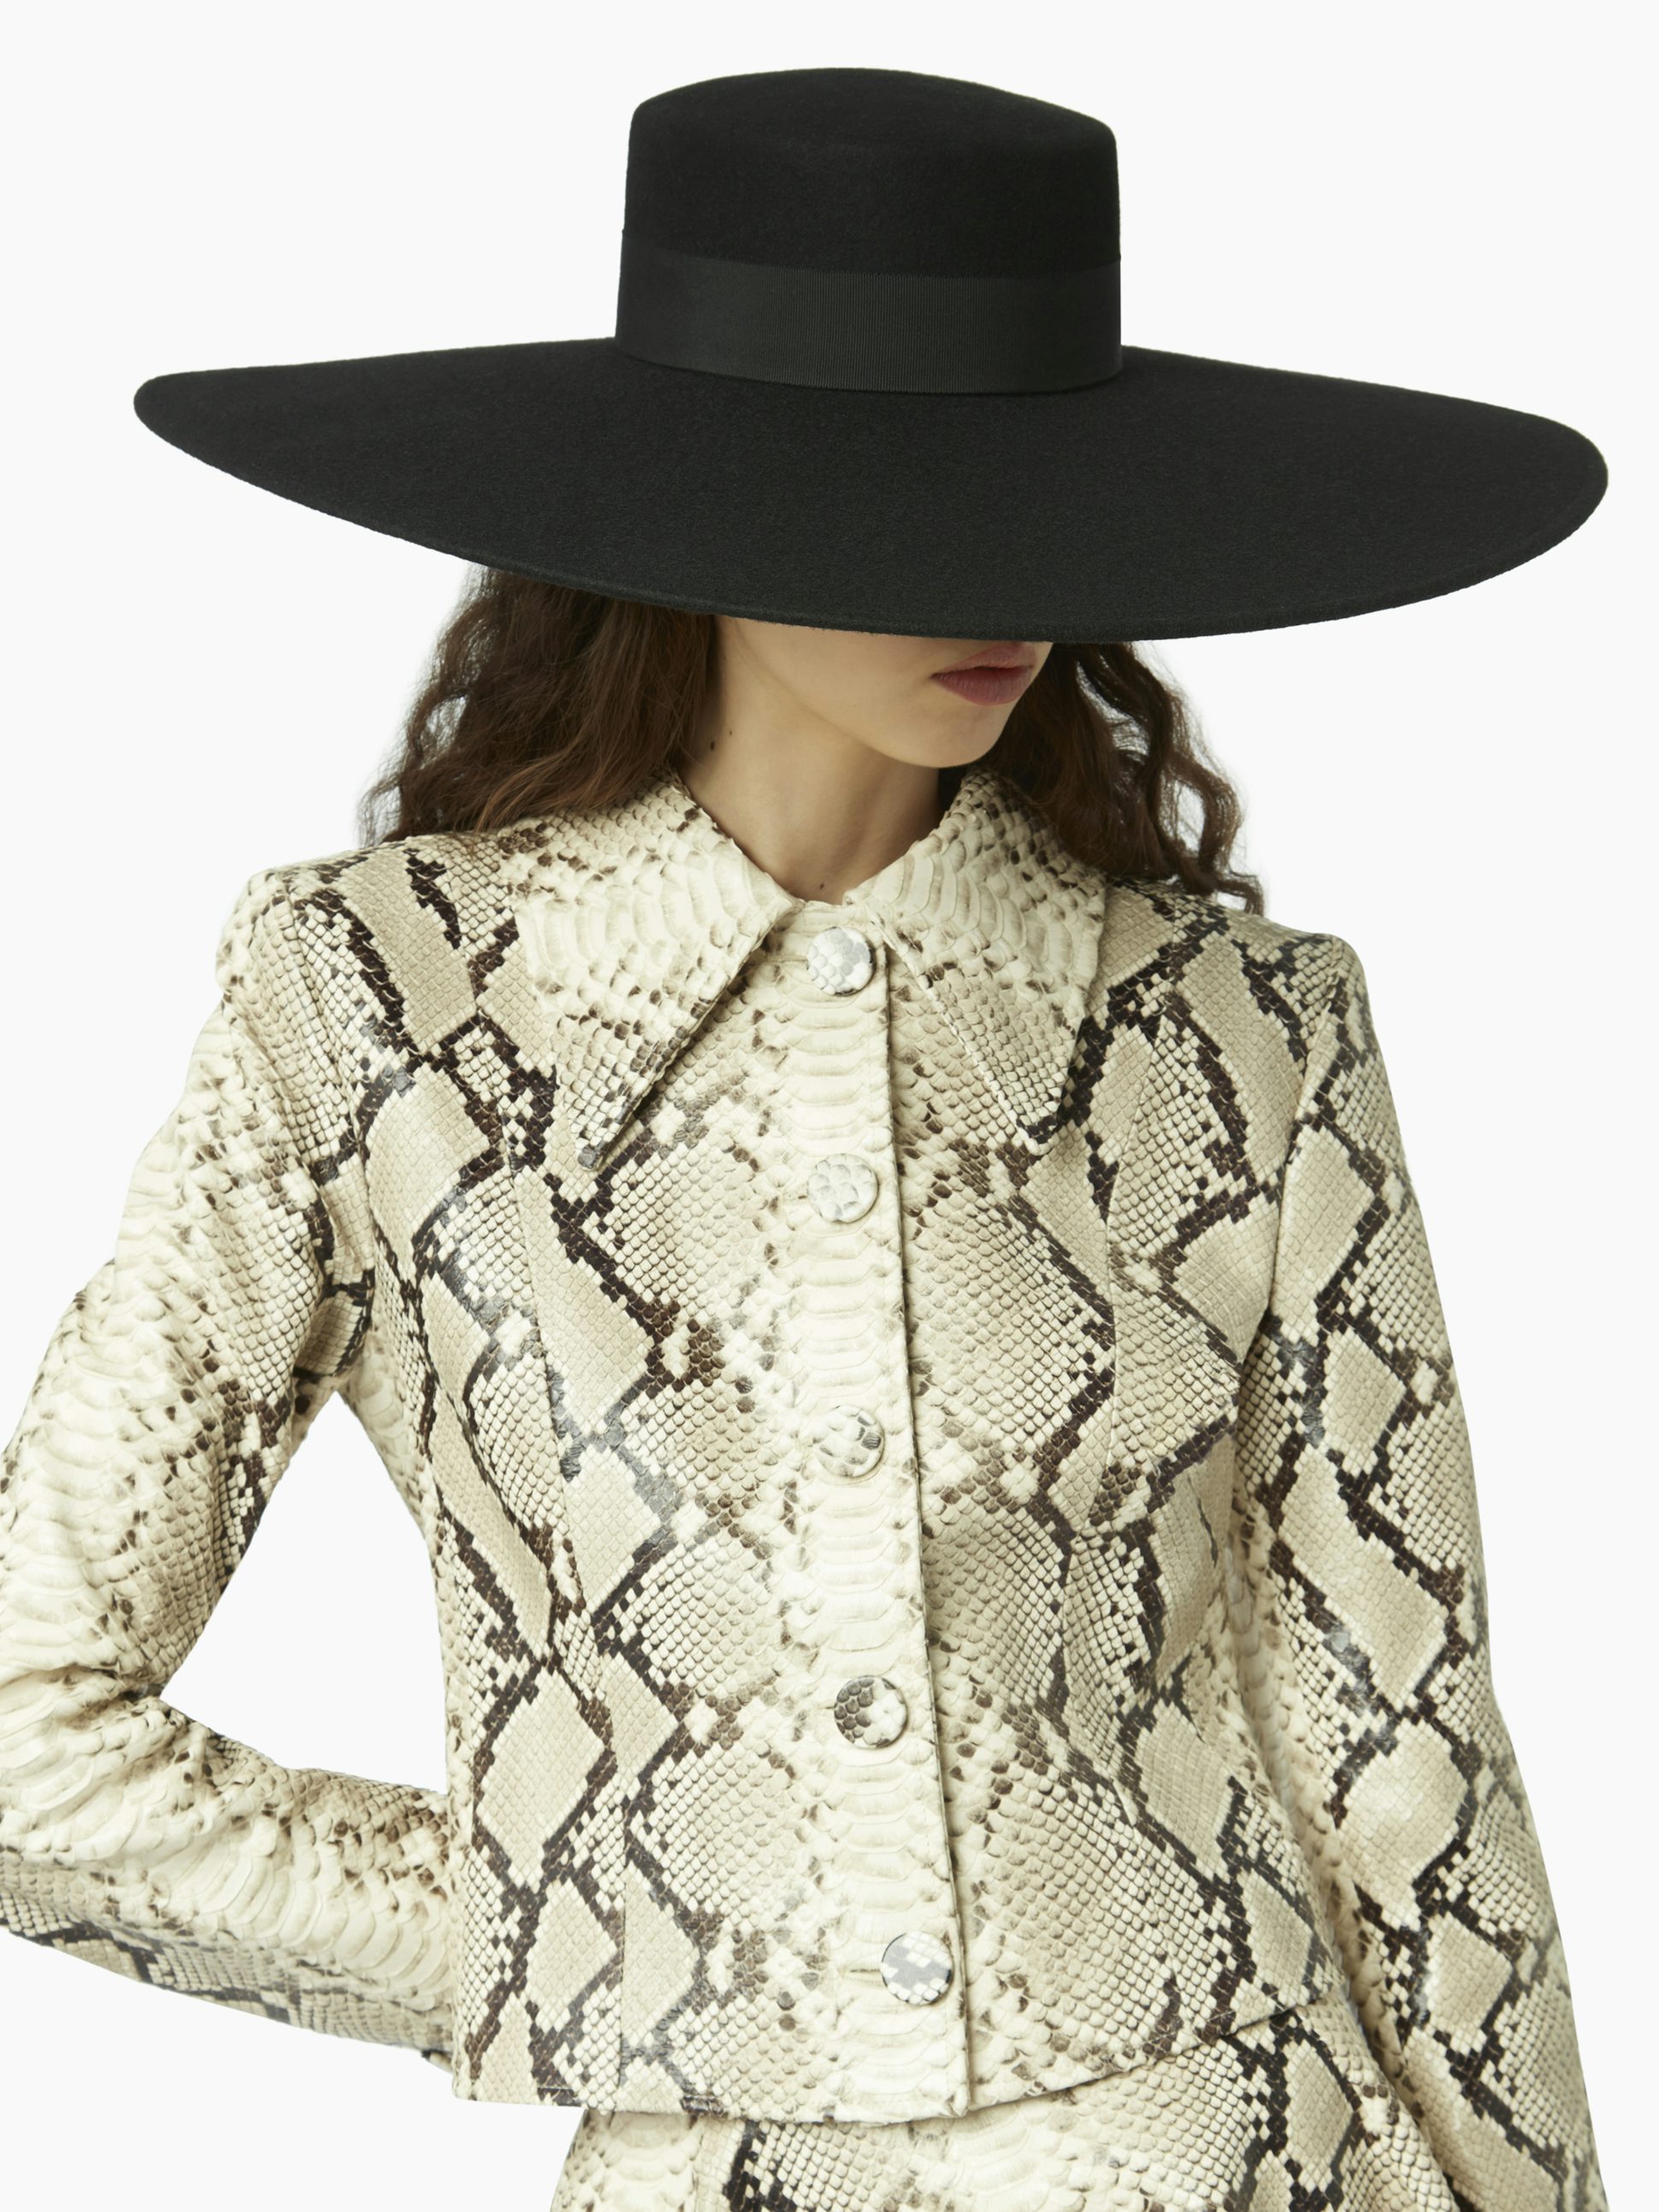 Felt cool capeline hat in black - Nina Ricci